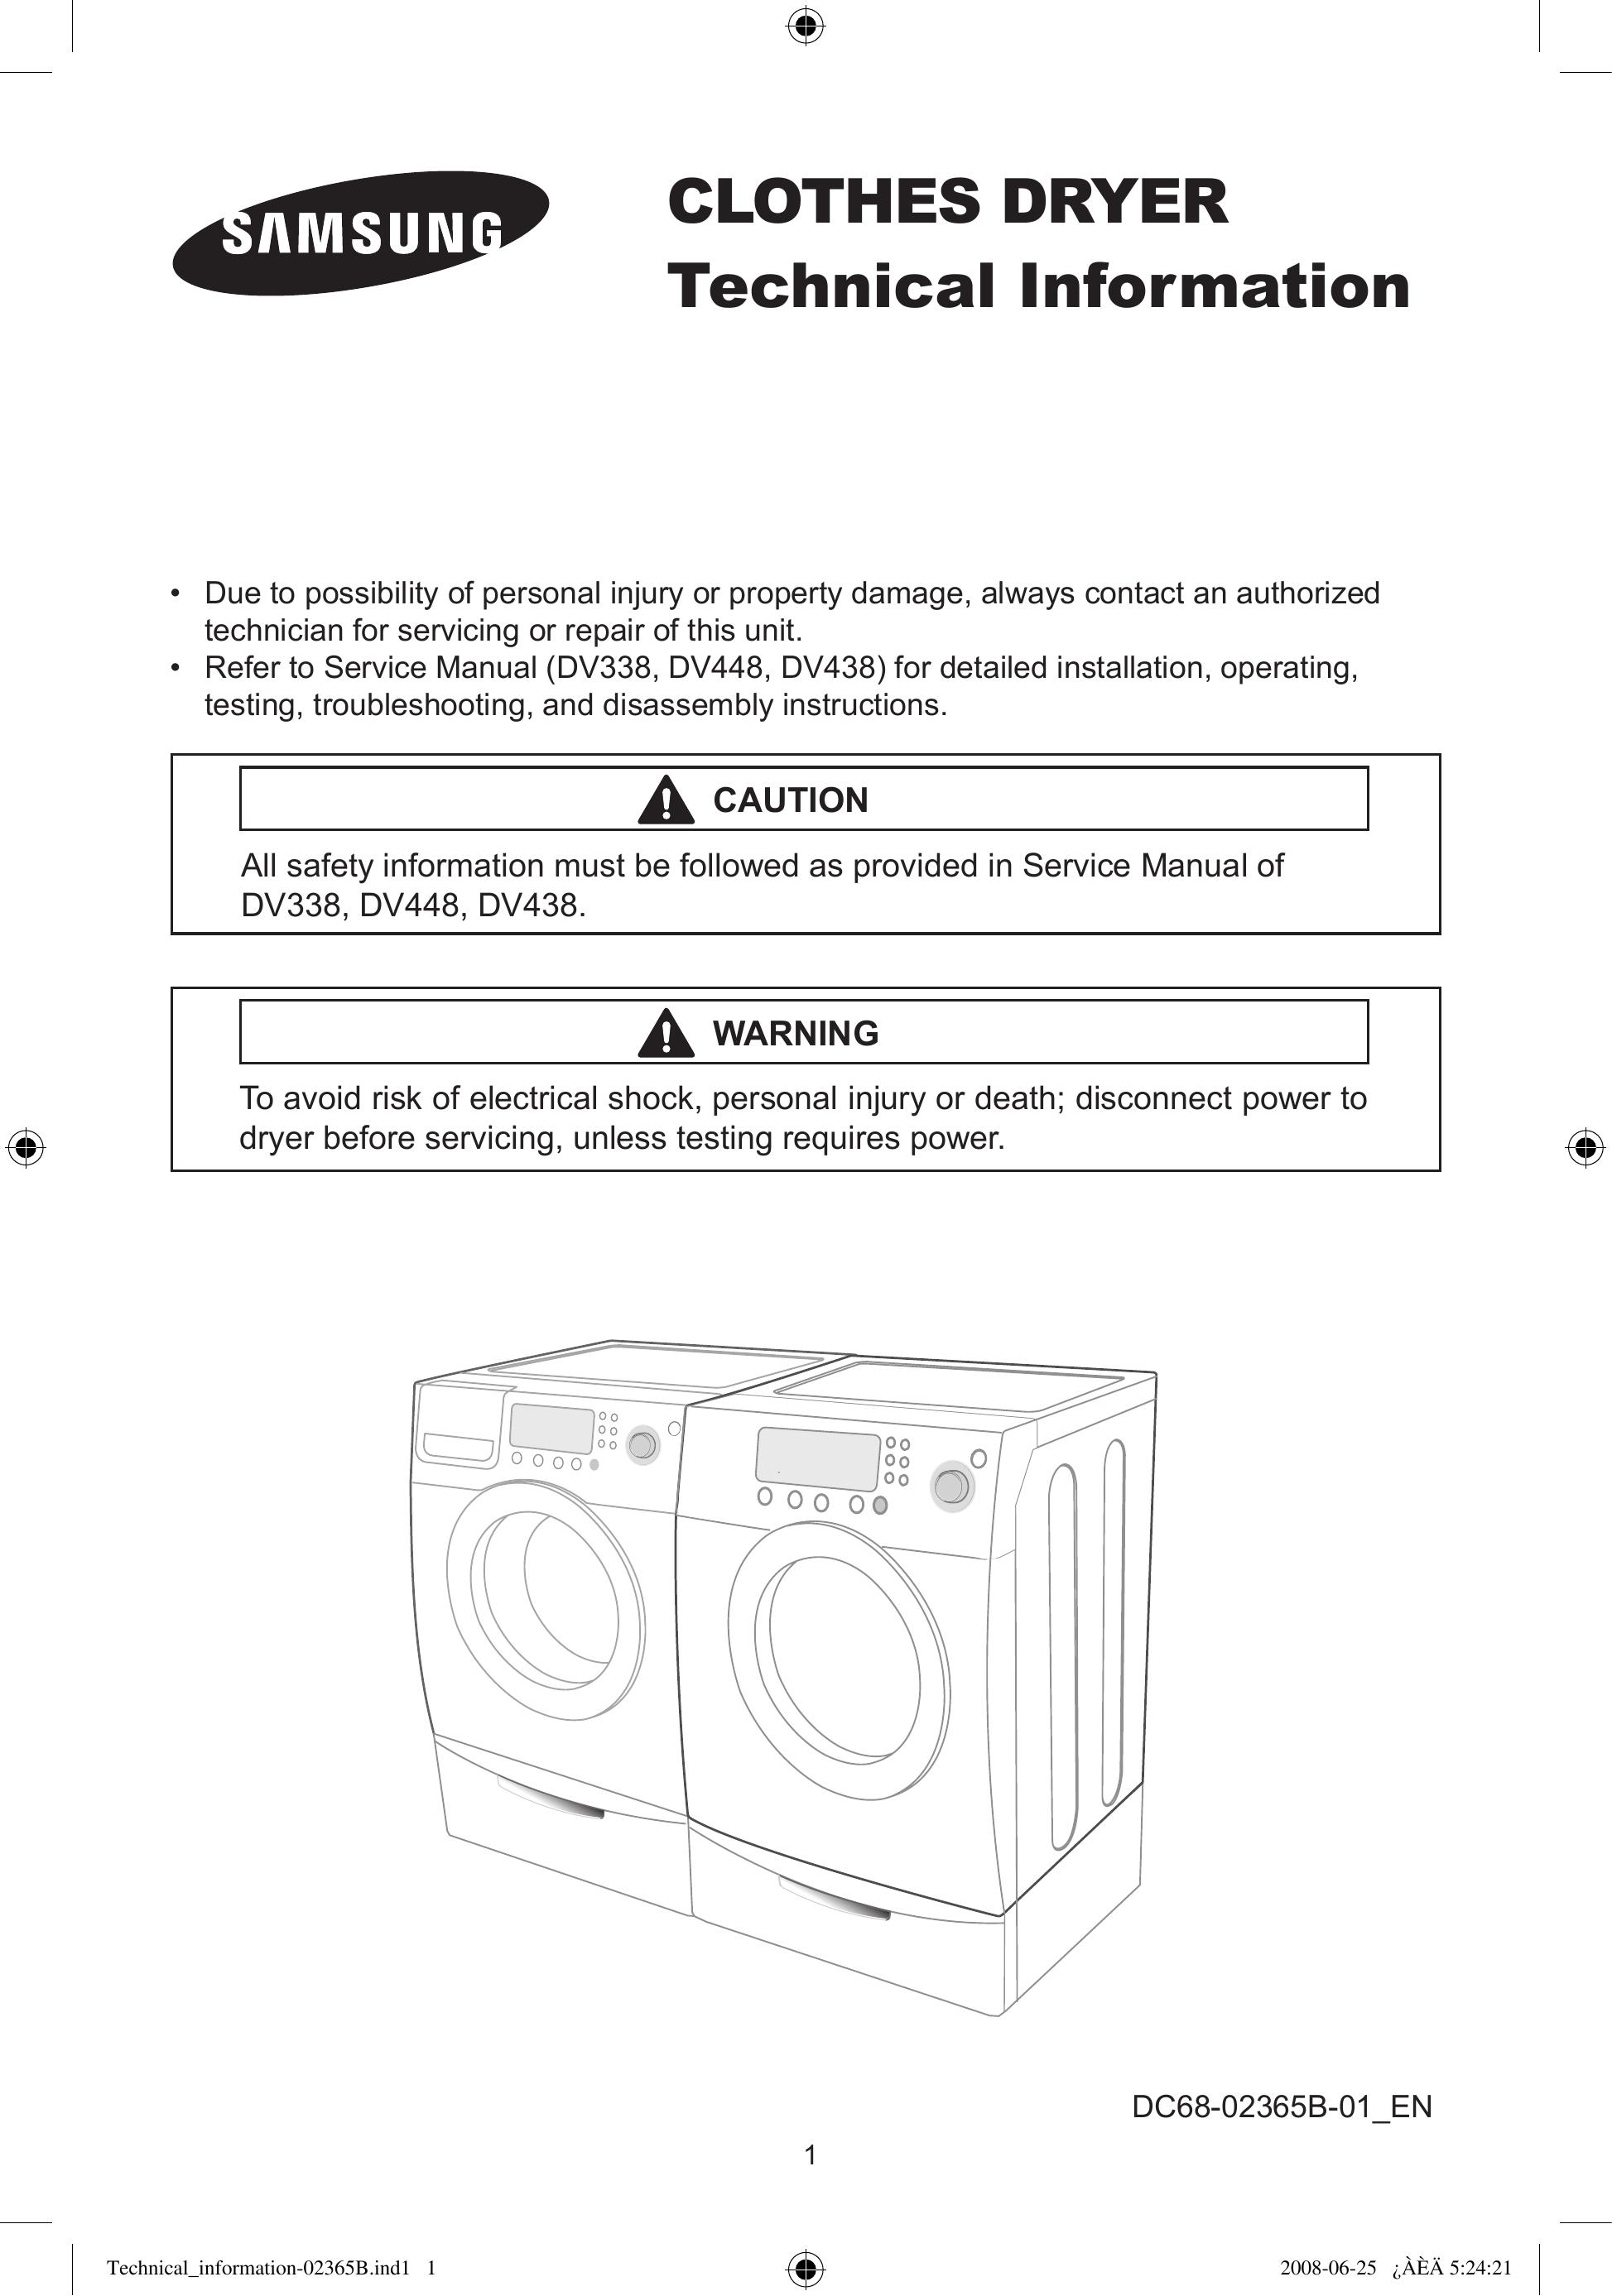 Samsung DV338 Clothes Dryer User Manual